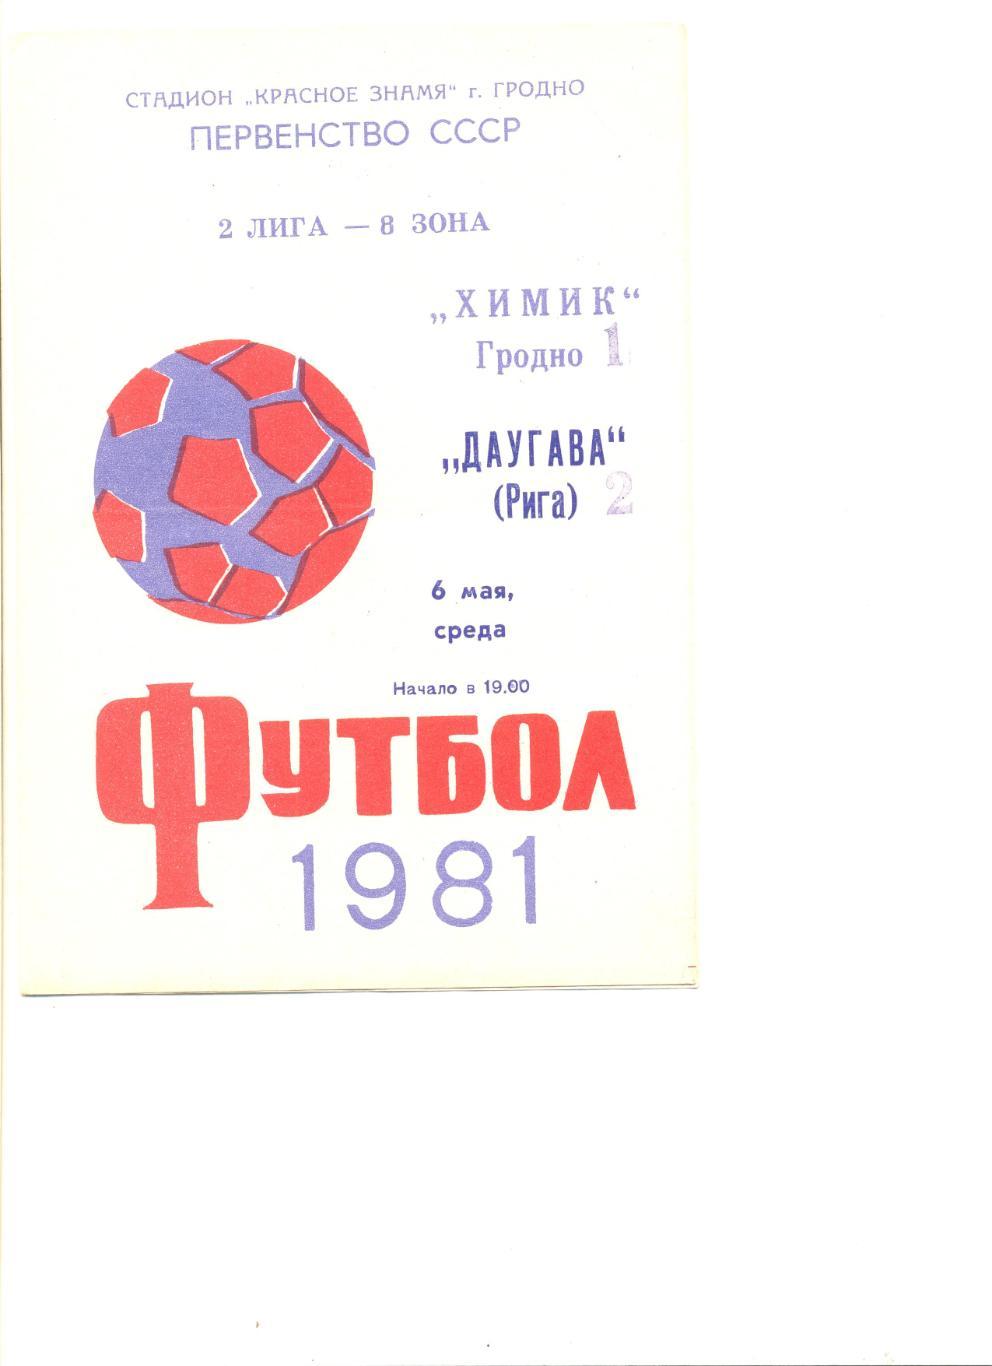 Химик Гродно - Даугава Рига 06.05.1981 г.